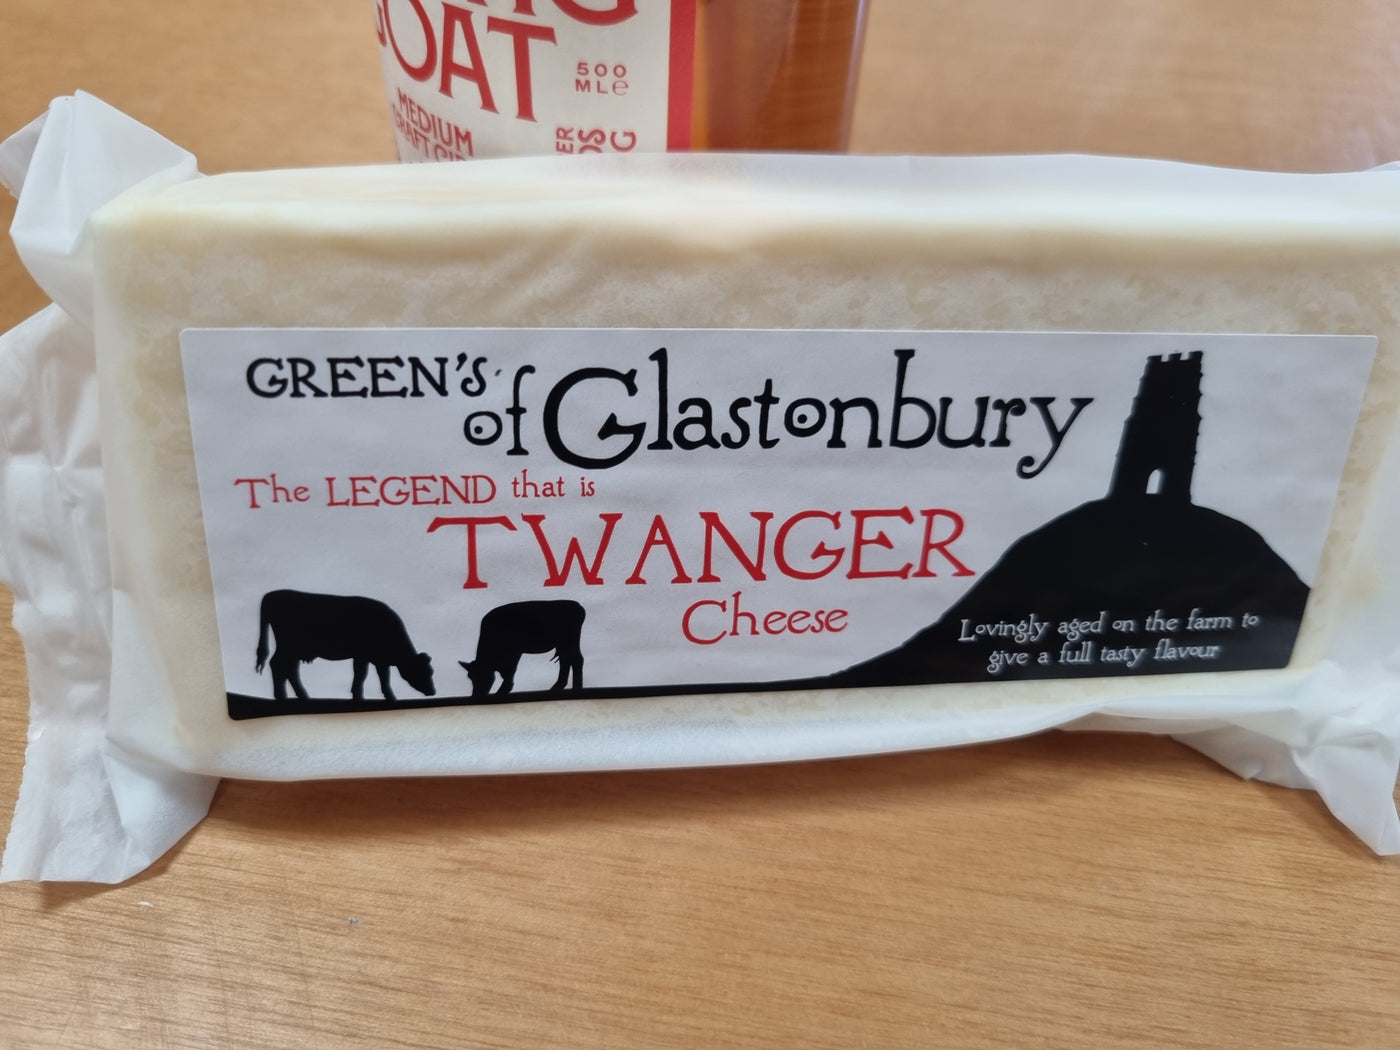 Glastonbury Twanger Cheddar Cheese | Award-winning (200g)